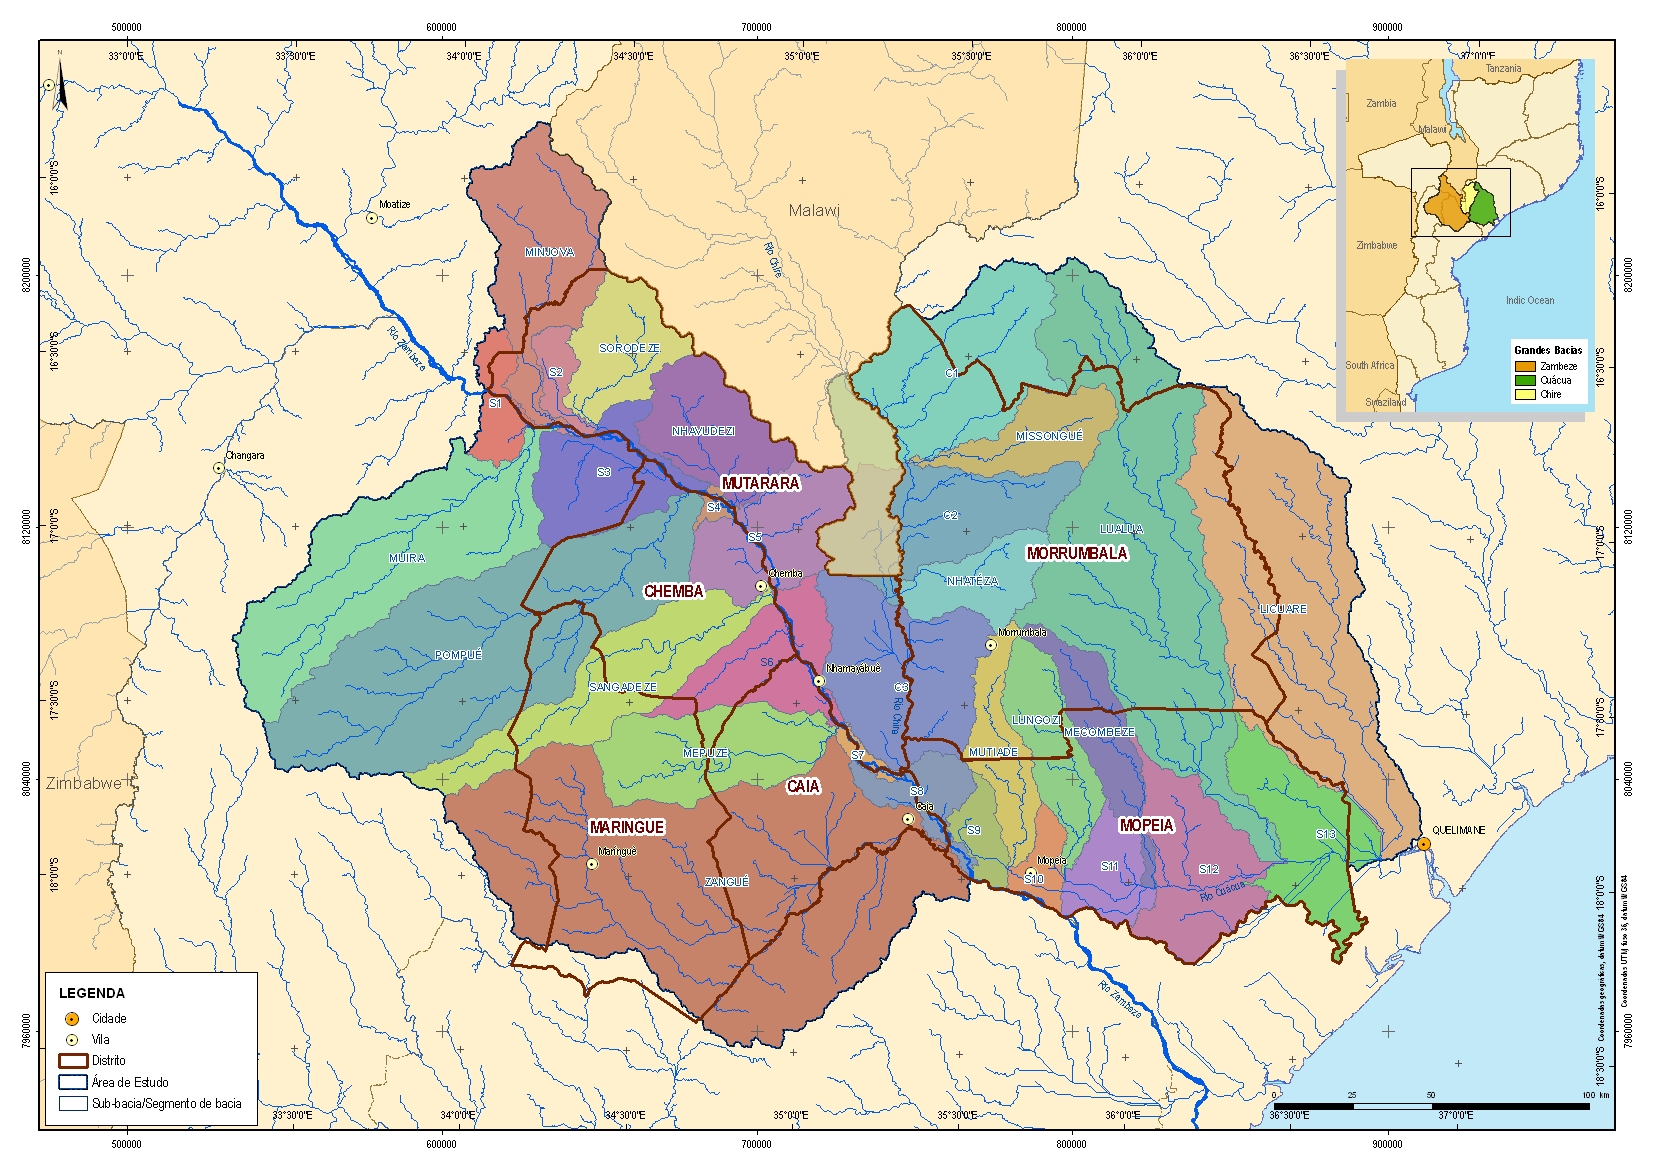 Área de estudo, distritos e bacias hidrográficas envolvidas